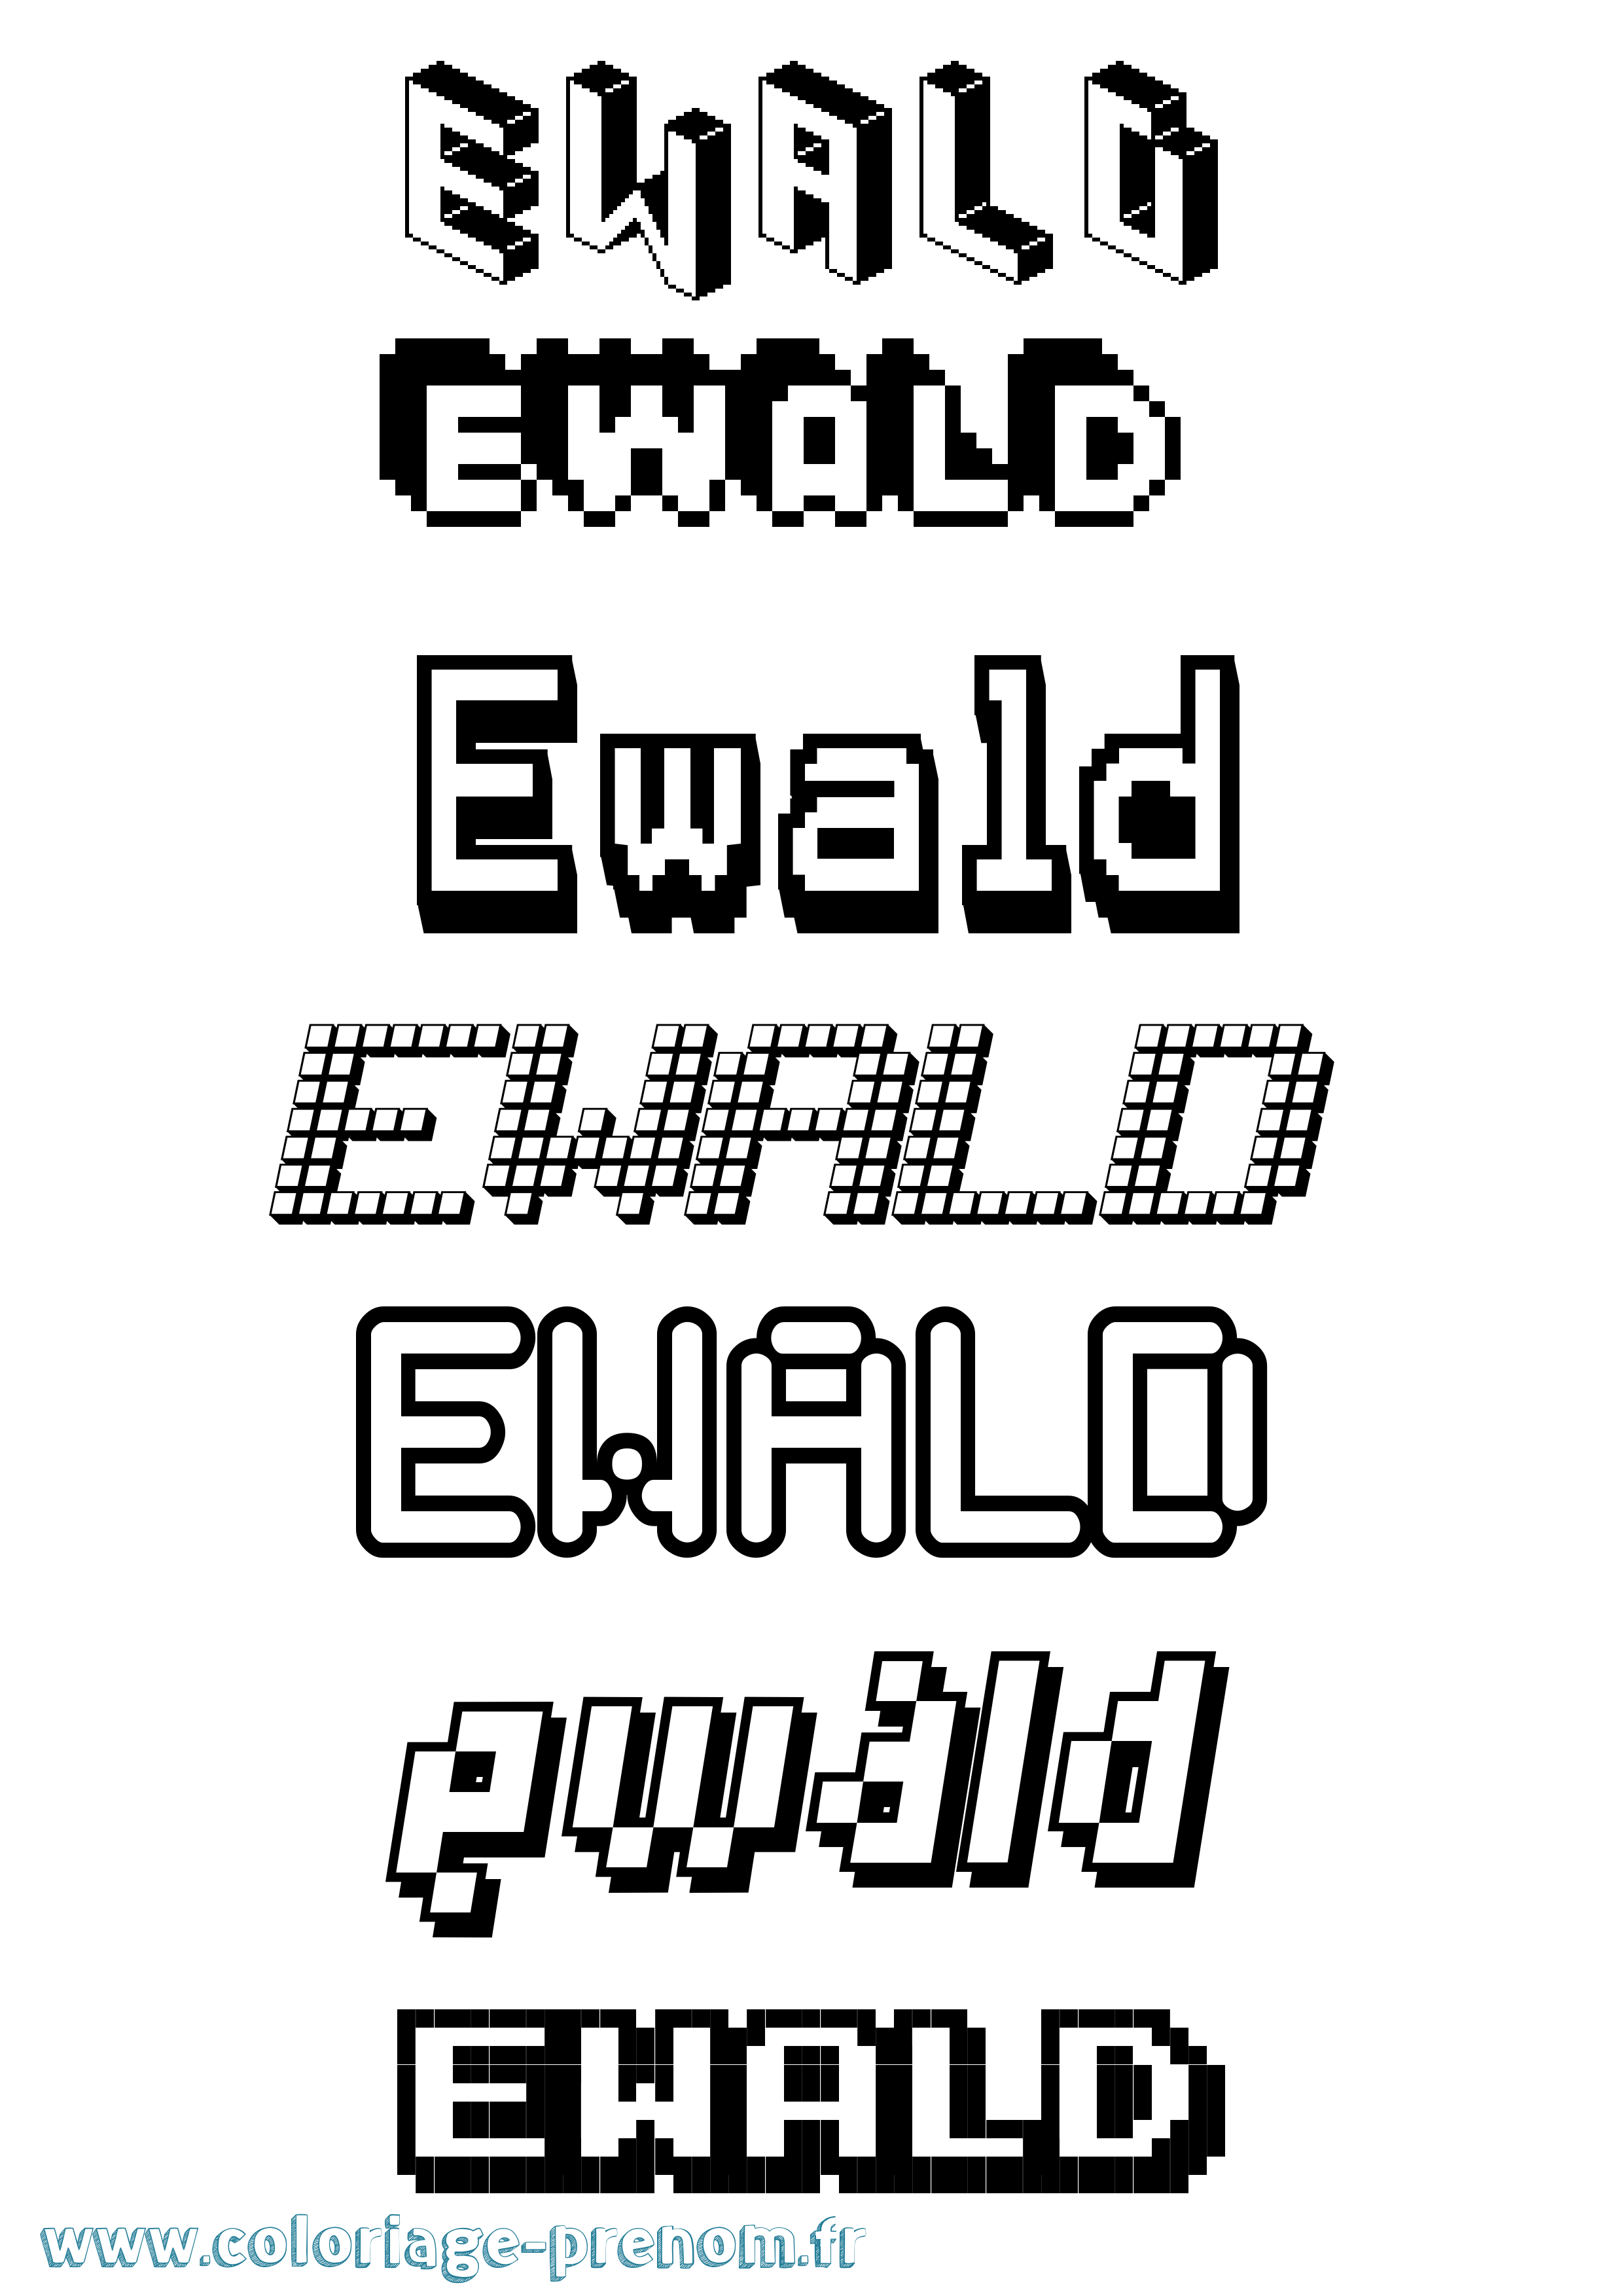 Coloriage prénom Ewald Pixel